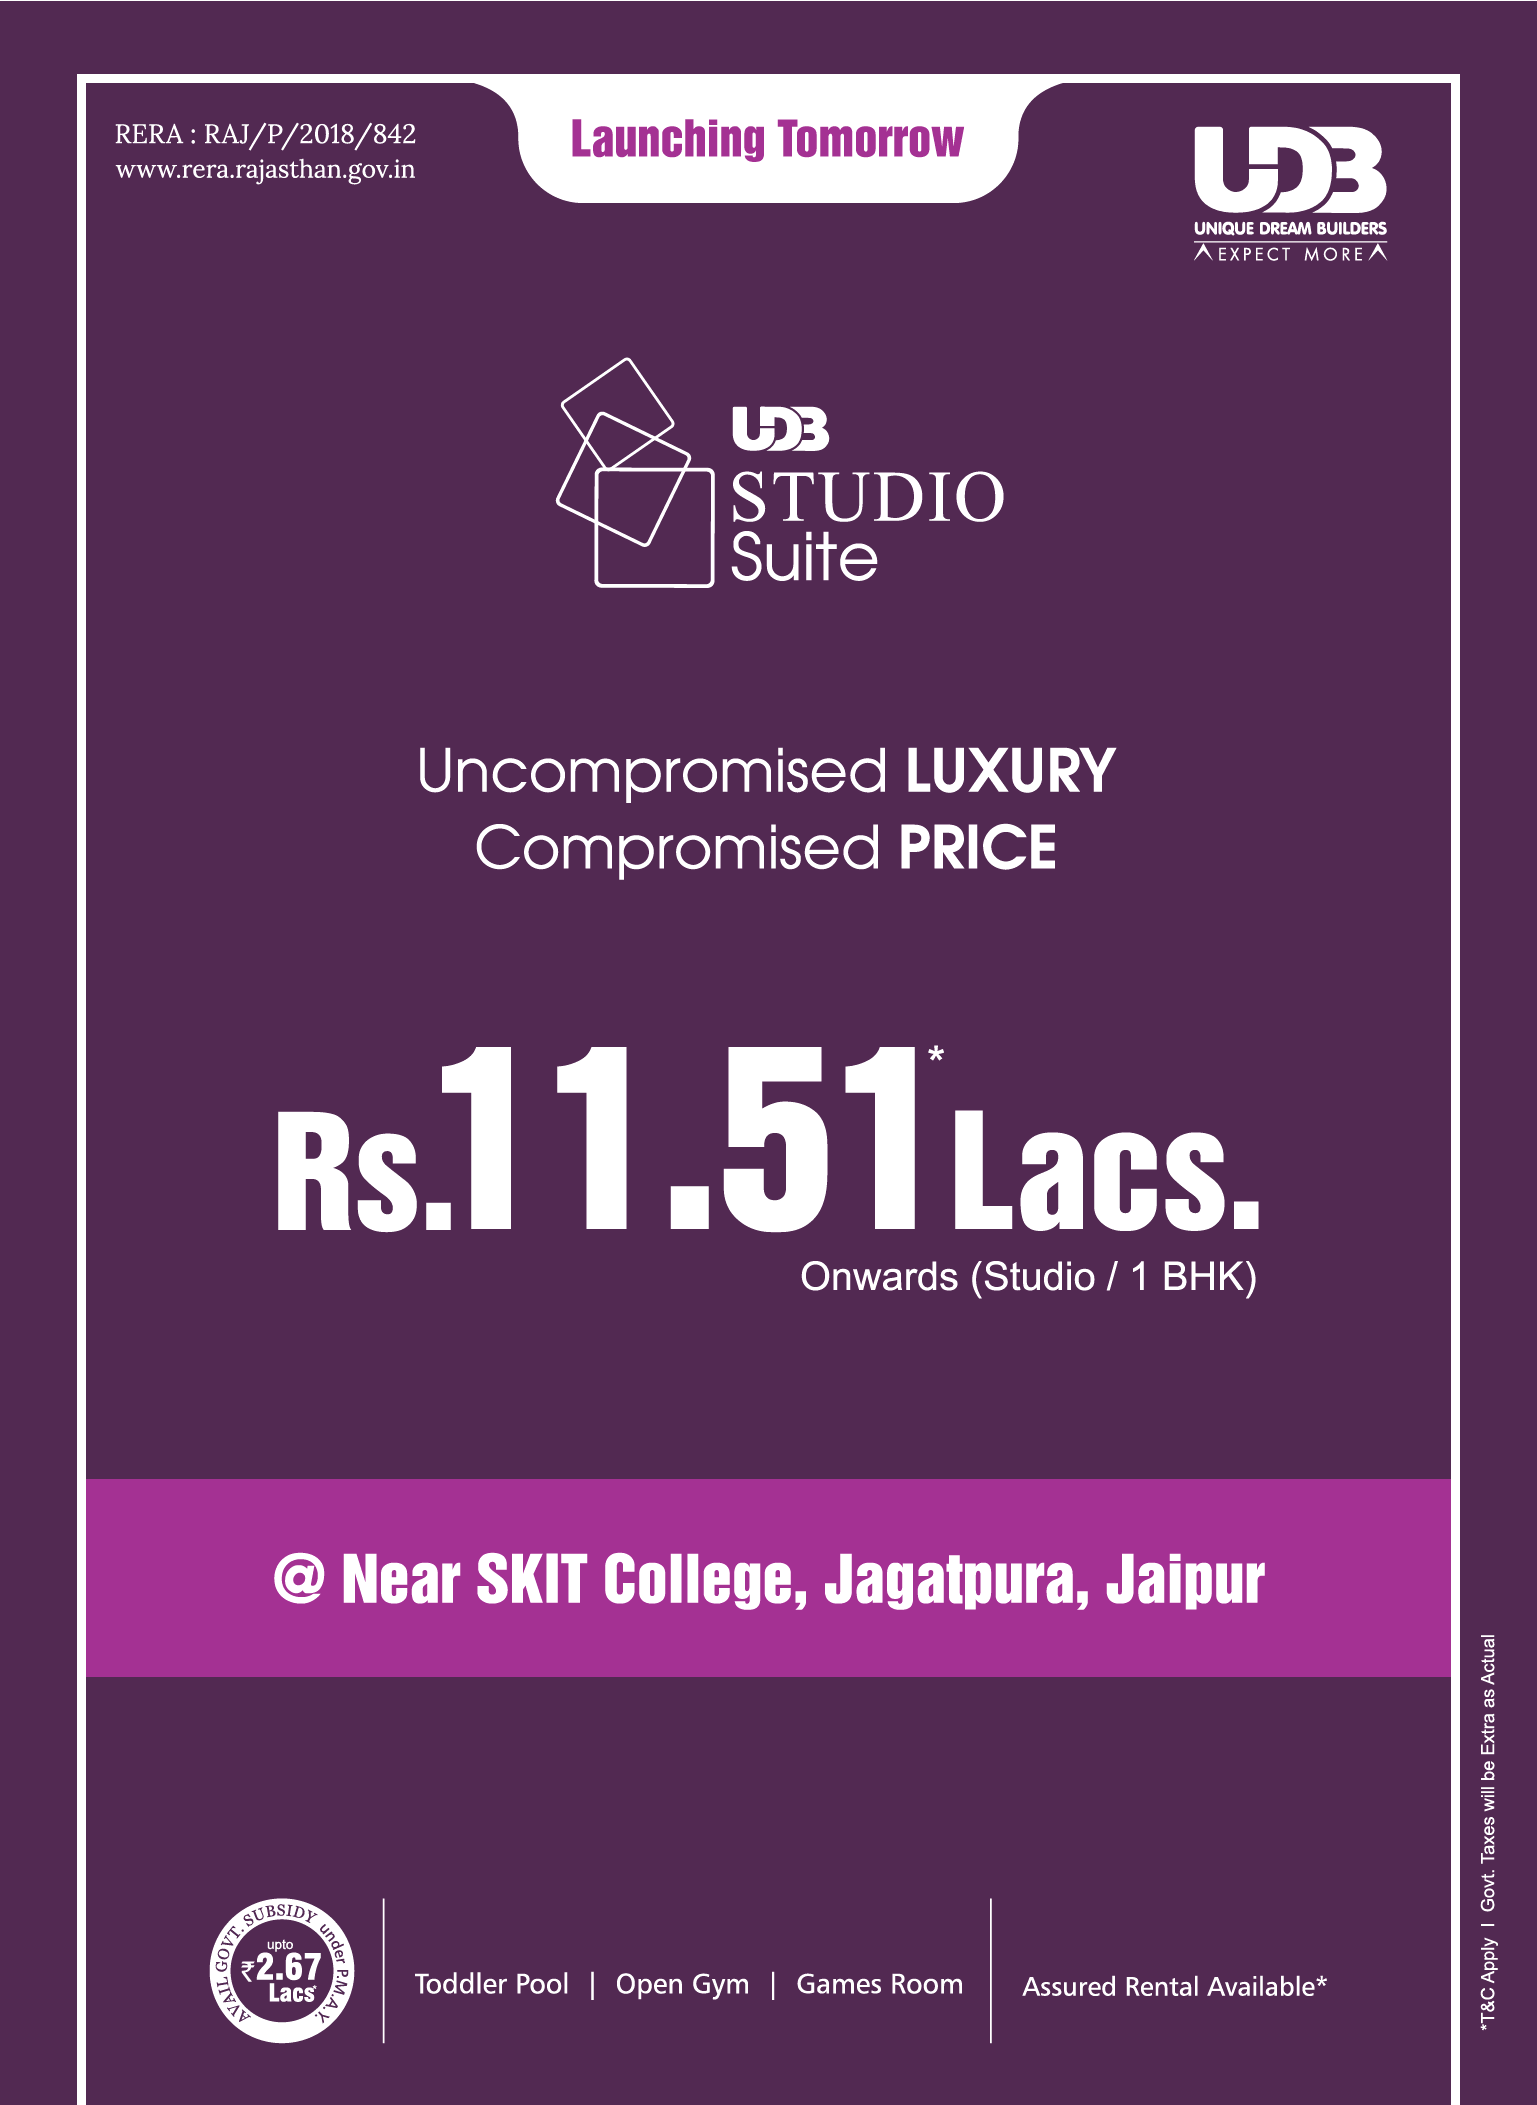 Experience uncompromised luxury in compromised price at UDB Studio Suite in Jaipur Update